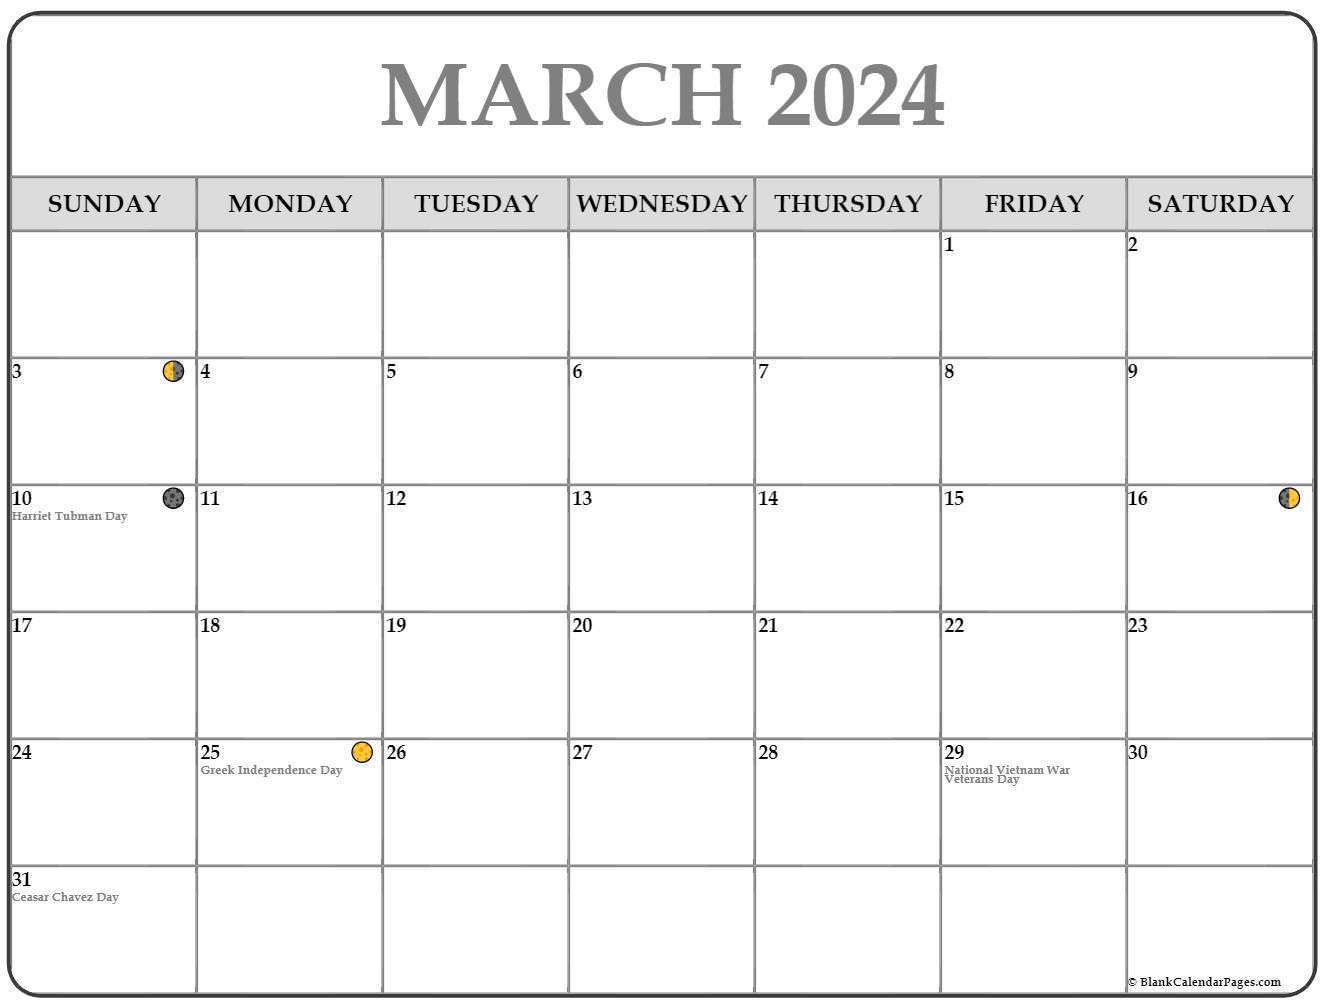 March 2023 Lunar Calendar | Moon Phase Calendar